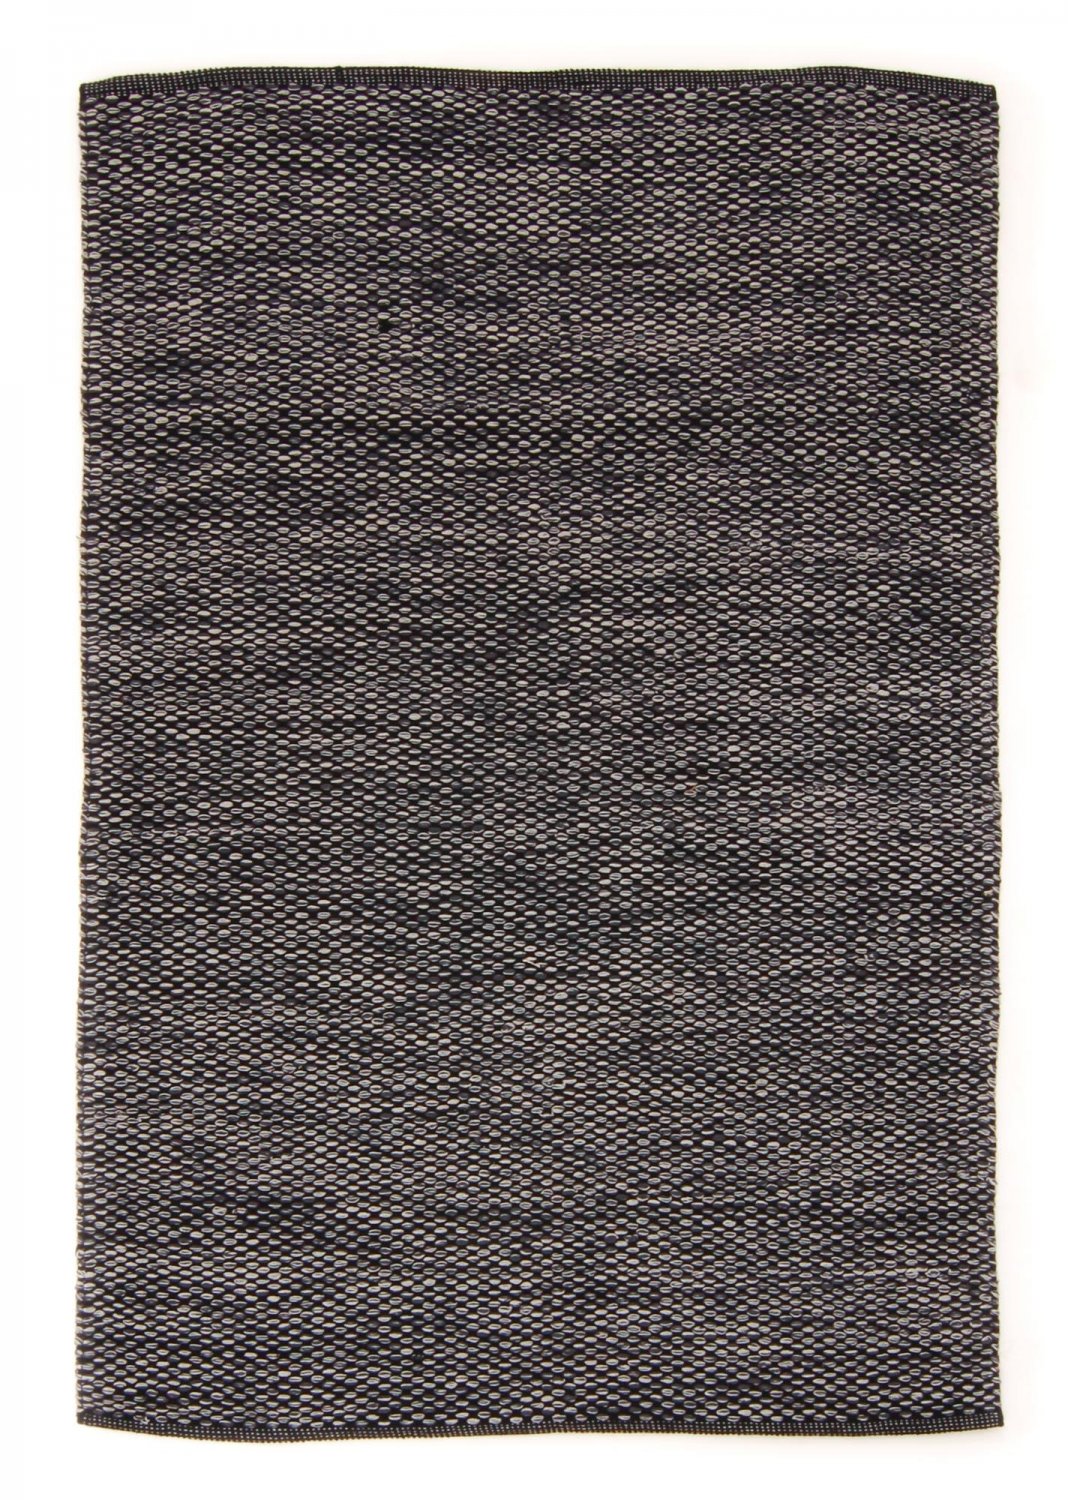 Voddenkleed - Tuva (zwart/grå)